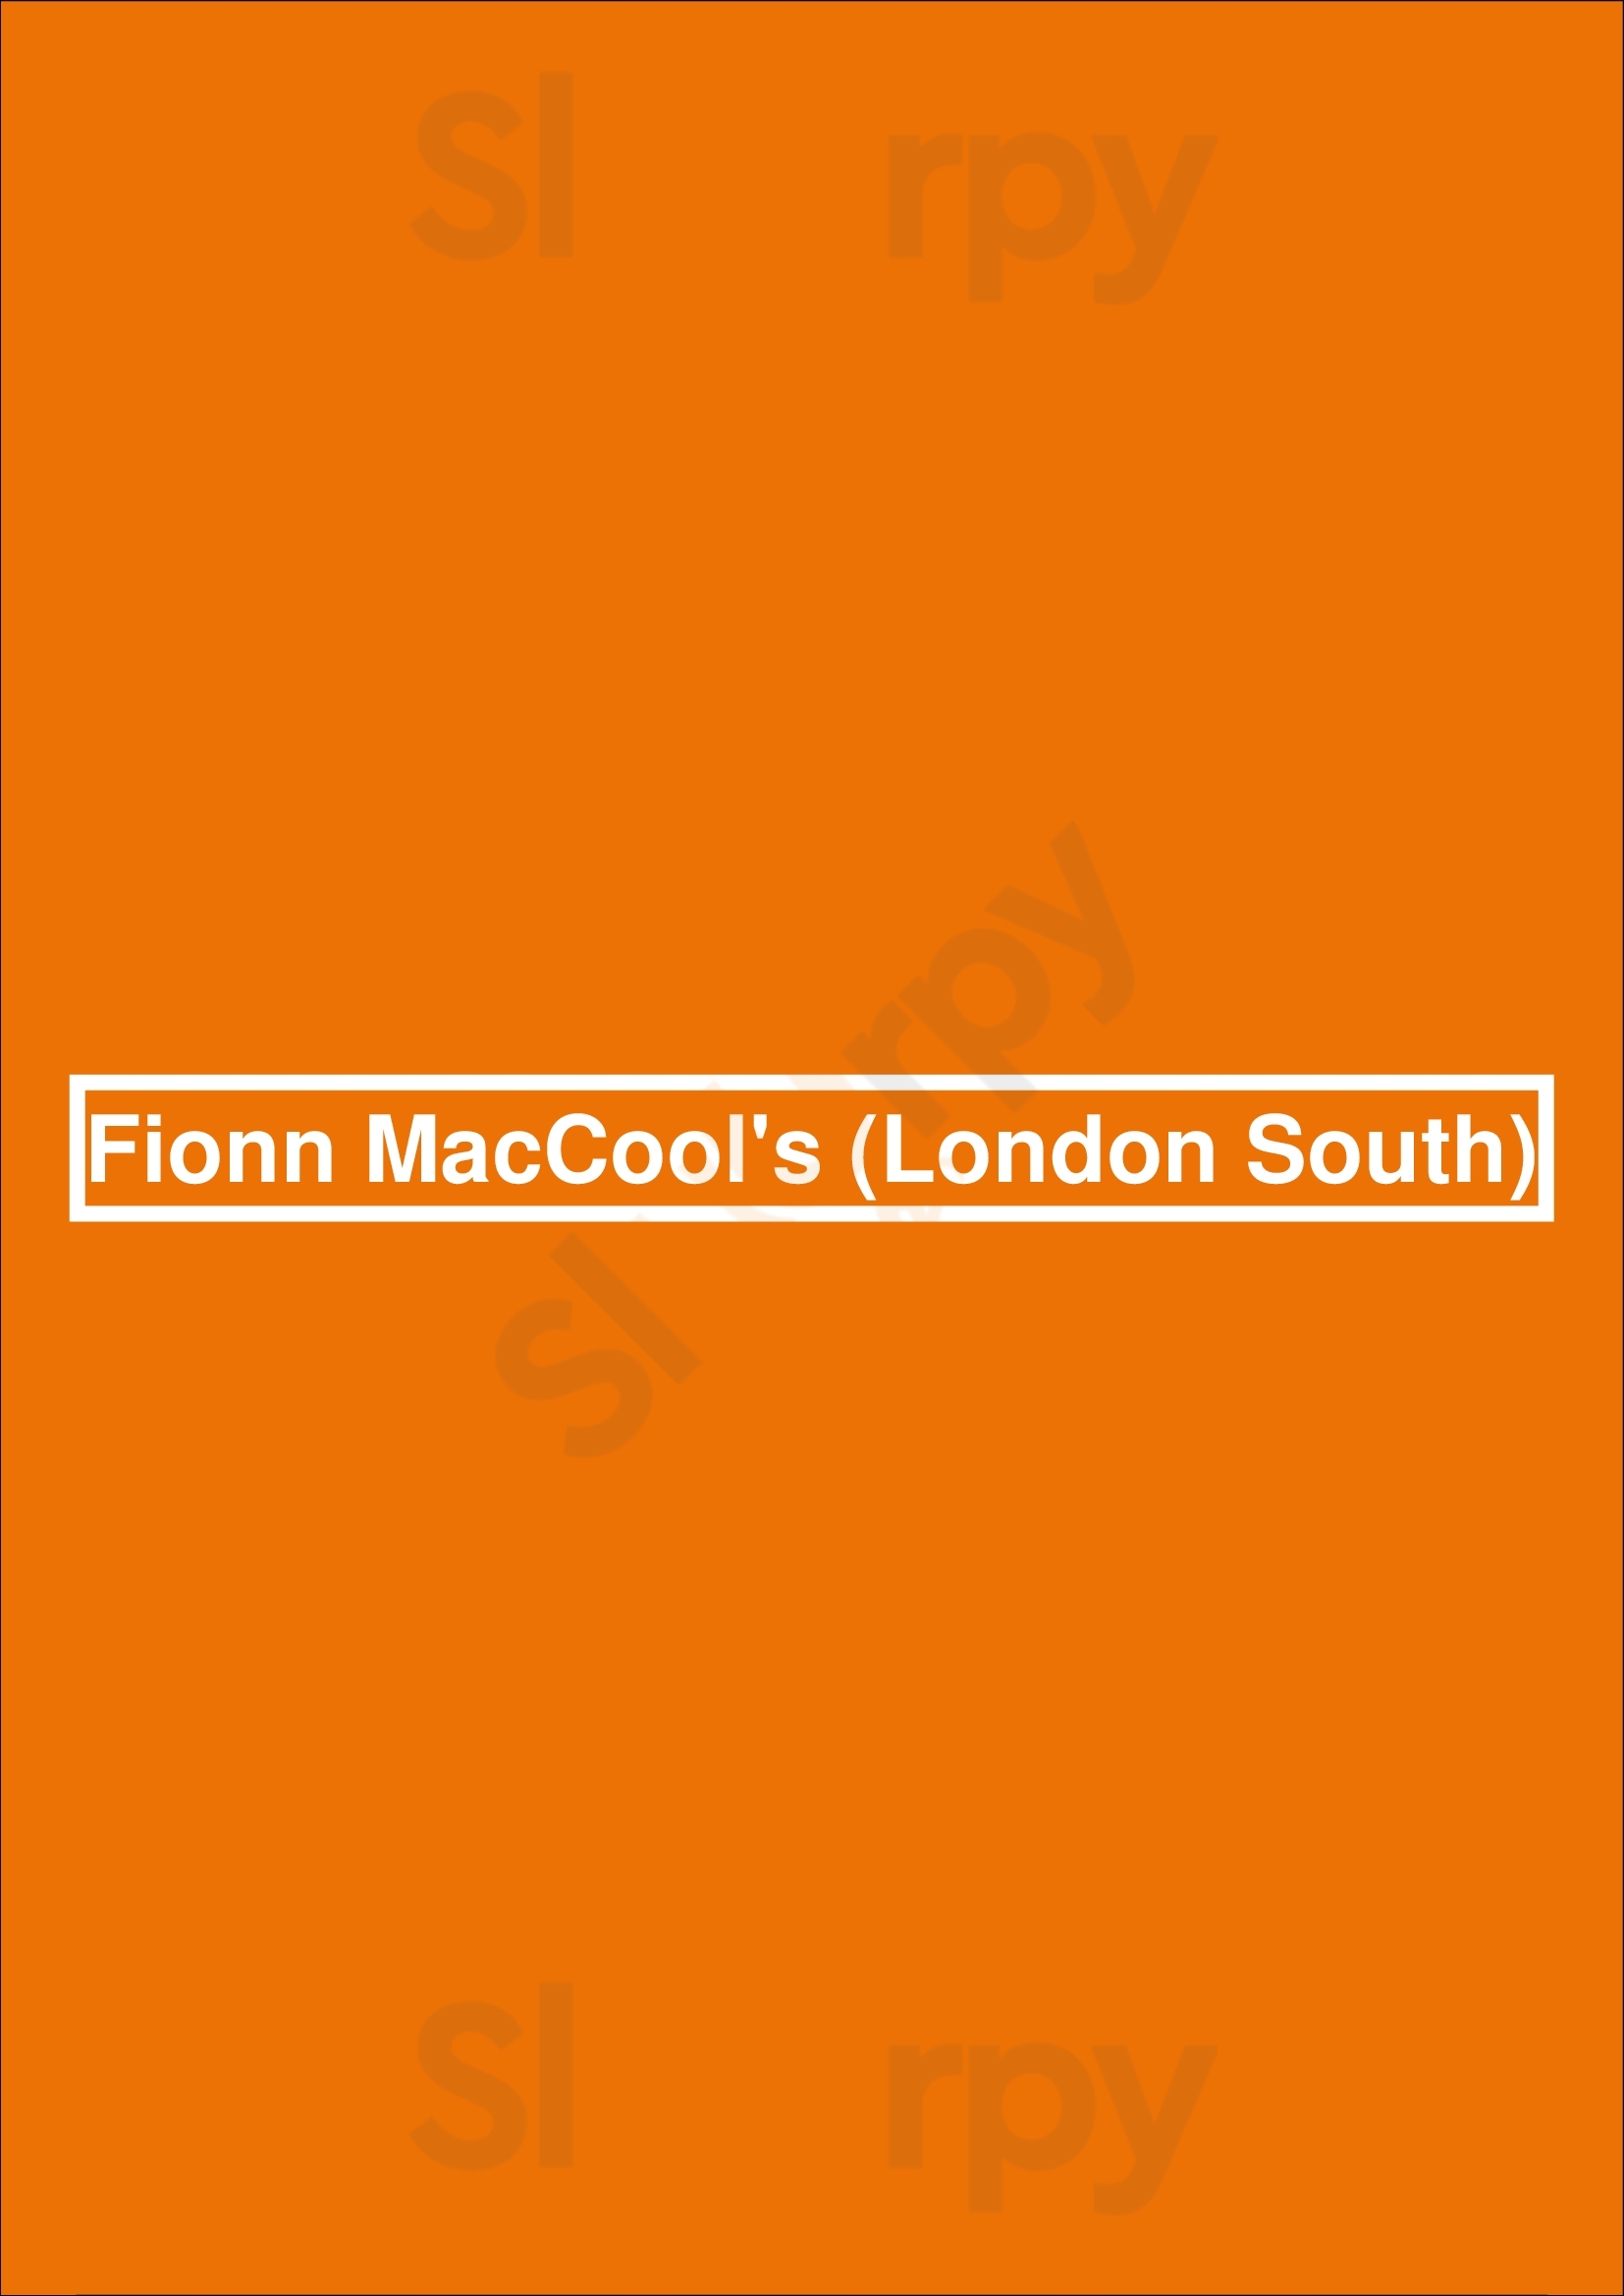 Fionn Maccool's London Menu - 1